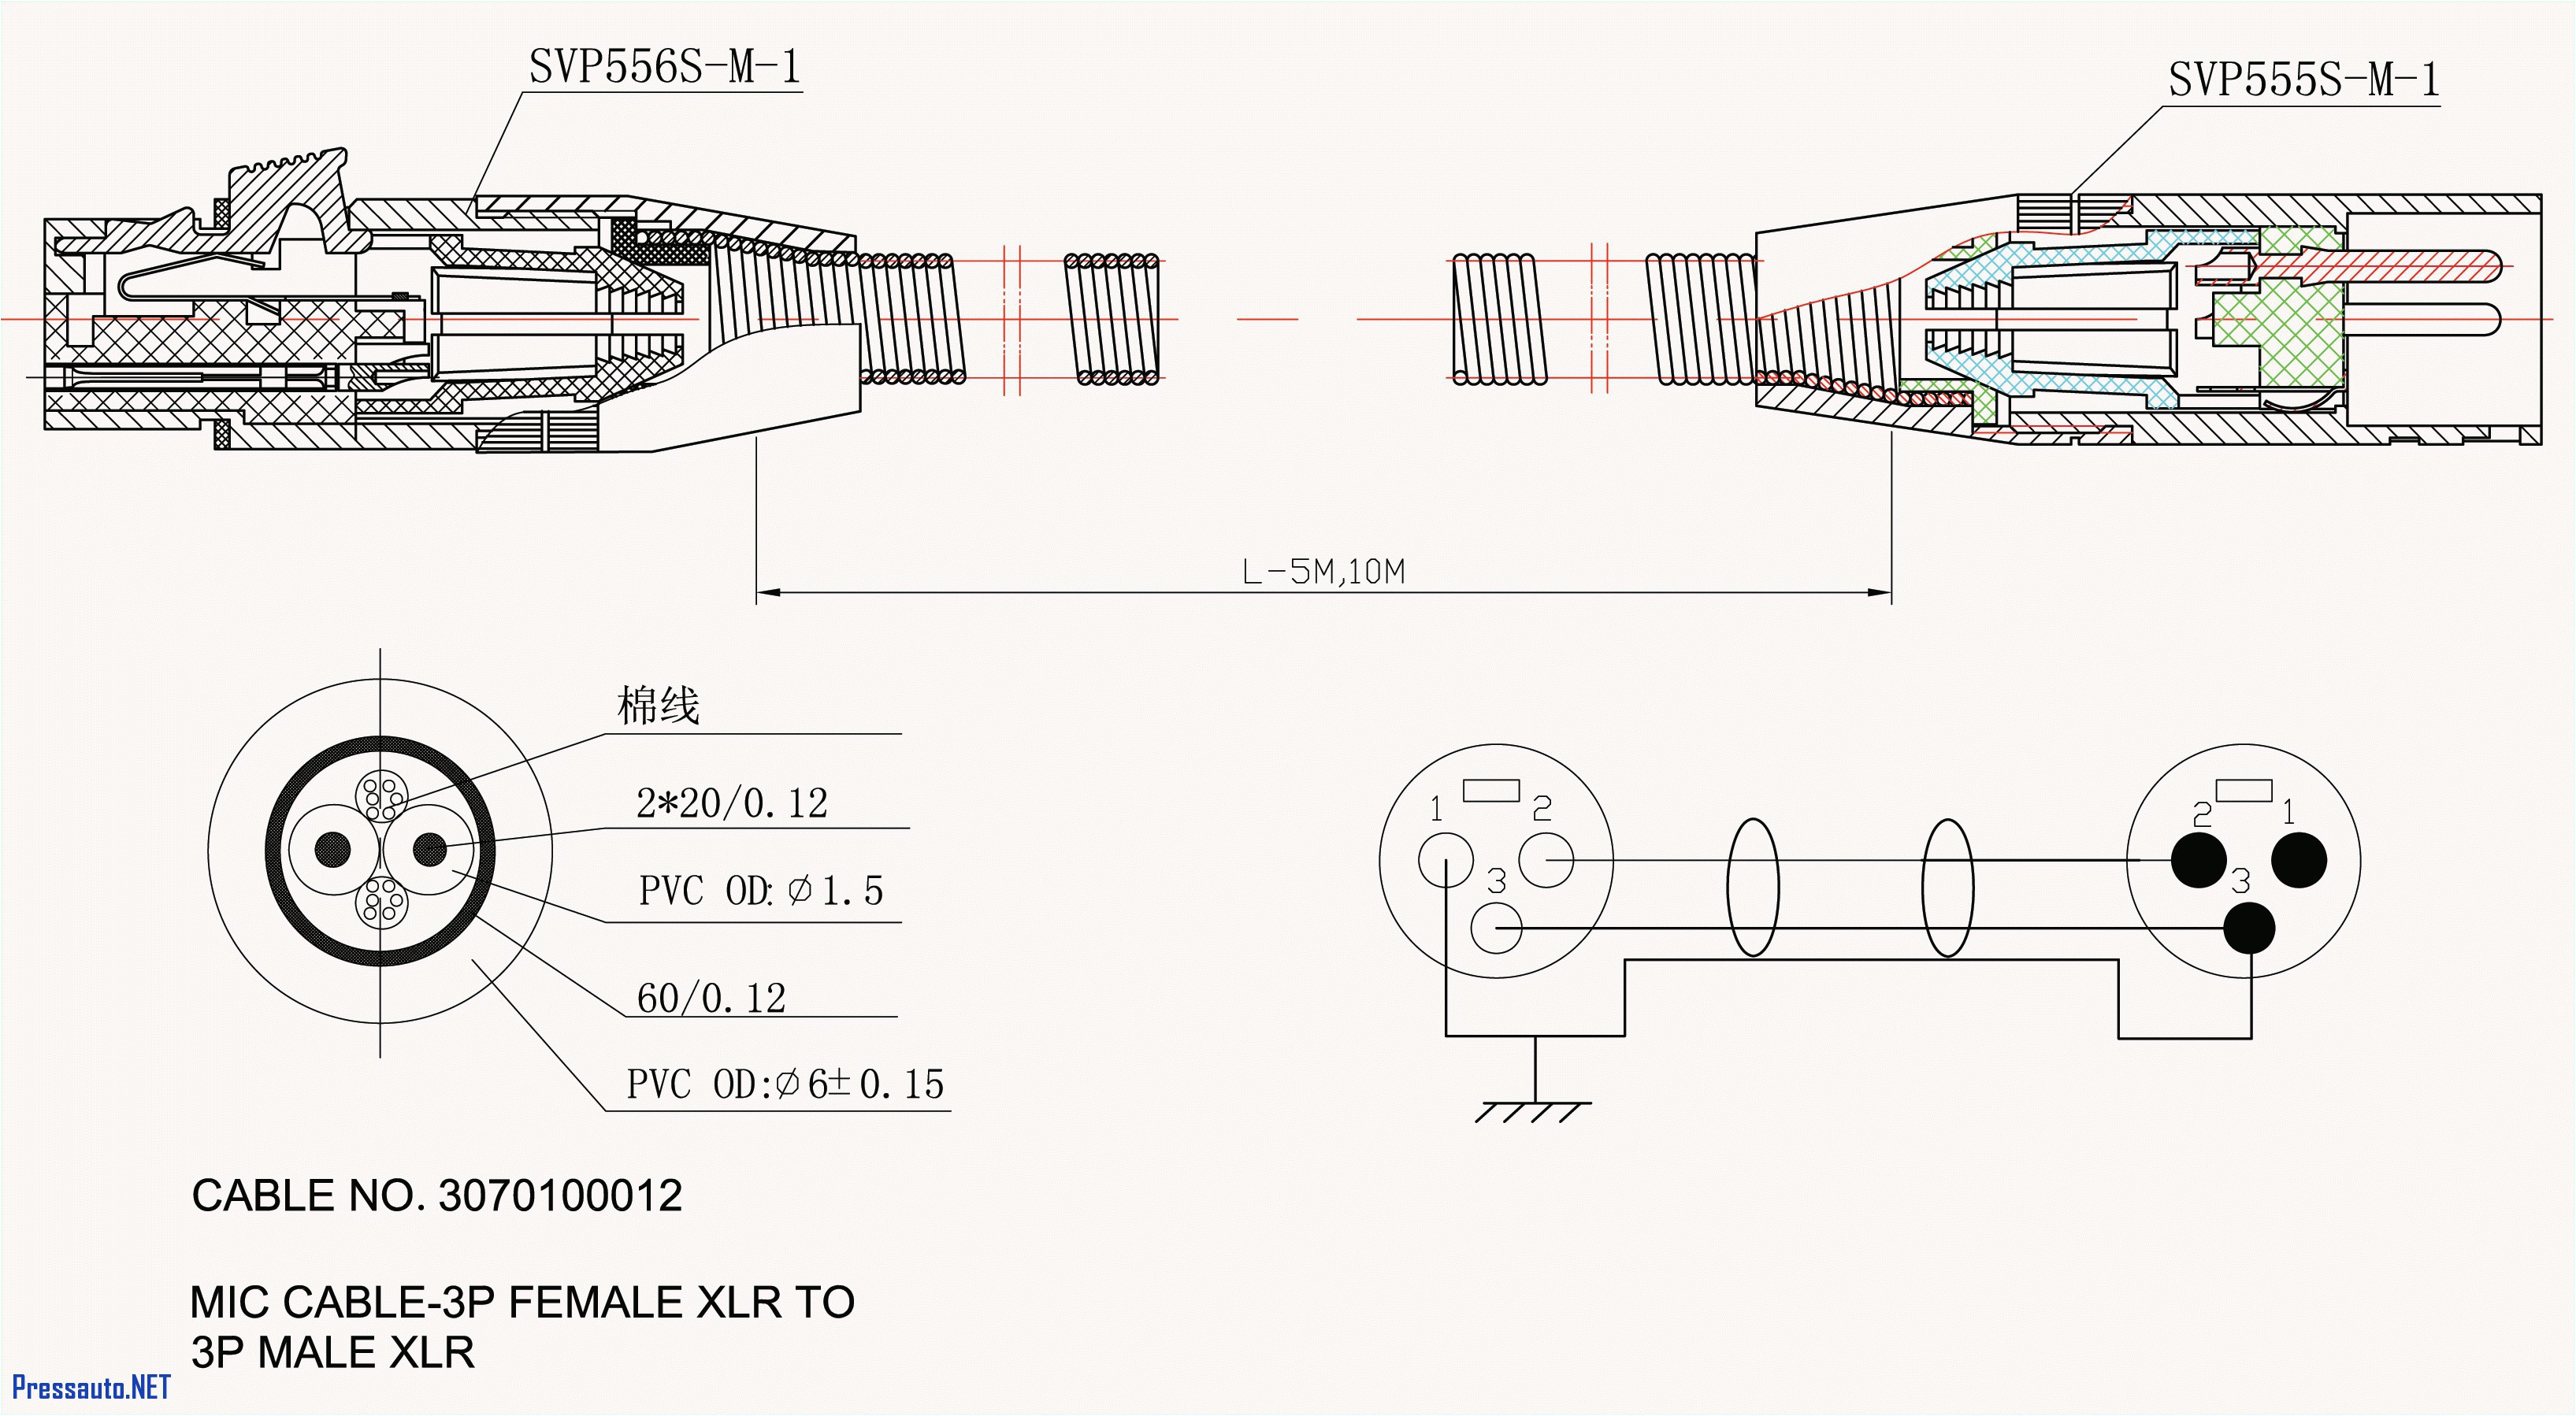 simple dmx wiring diagram wiring diagram view 6 pin dmx wiring diagram